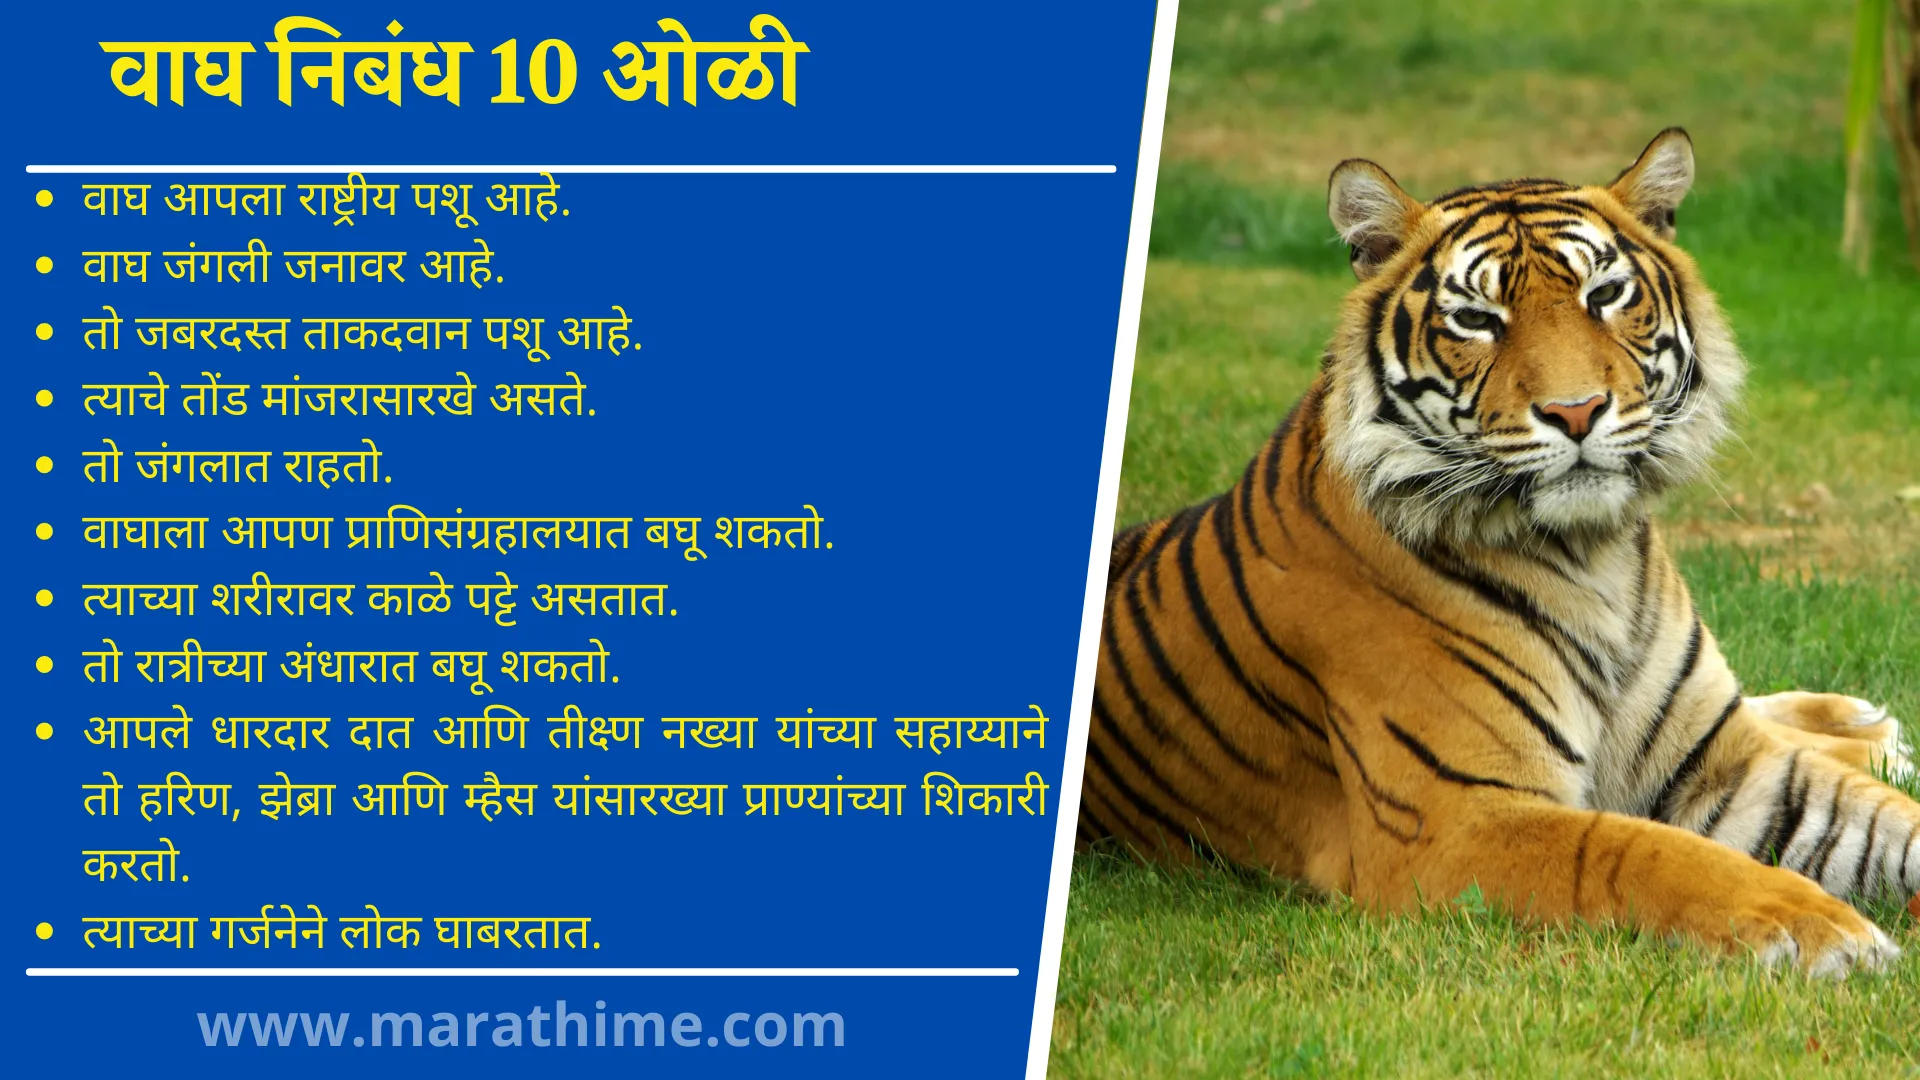 वाघ निबंध 10 ओळी, 10 Lines On Tiger in Marathi